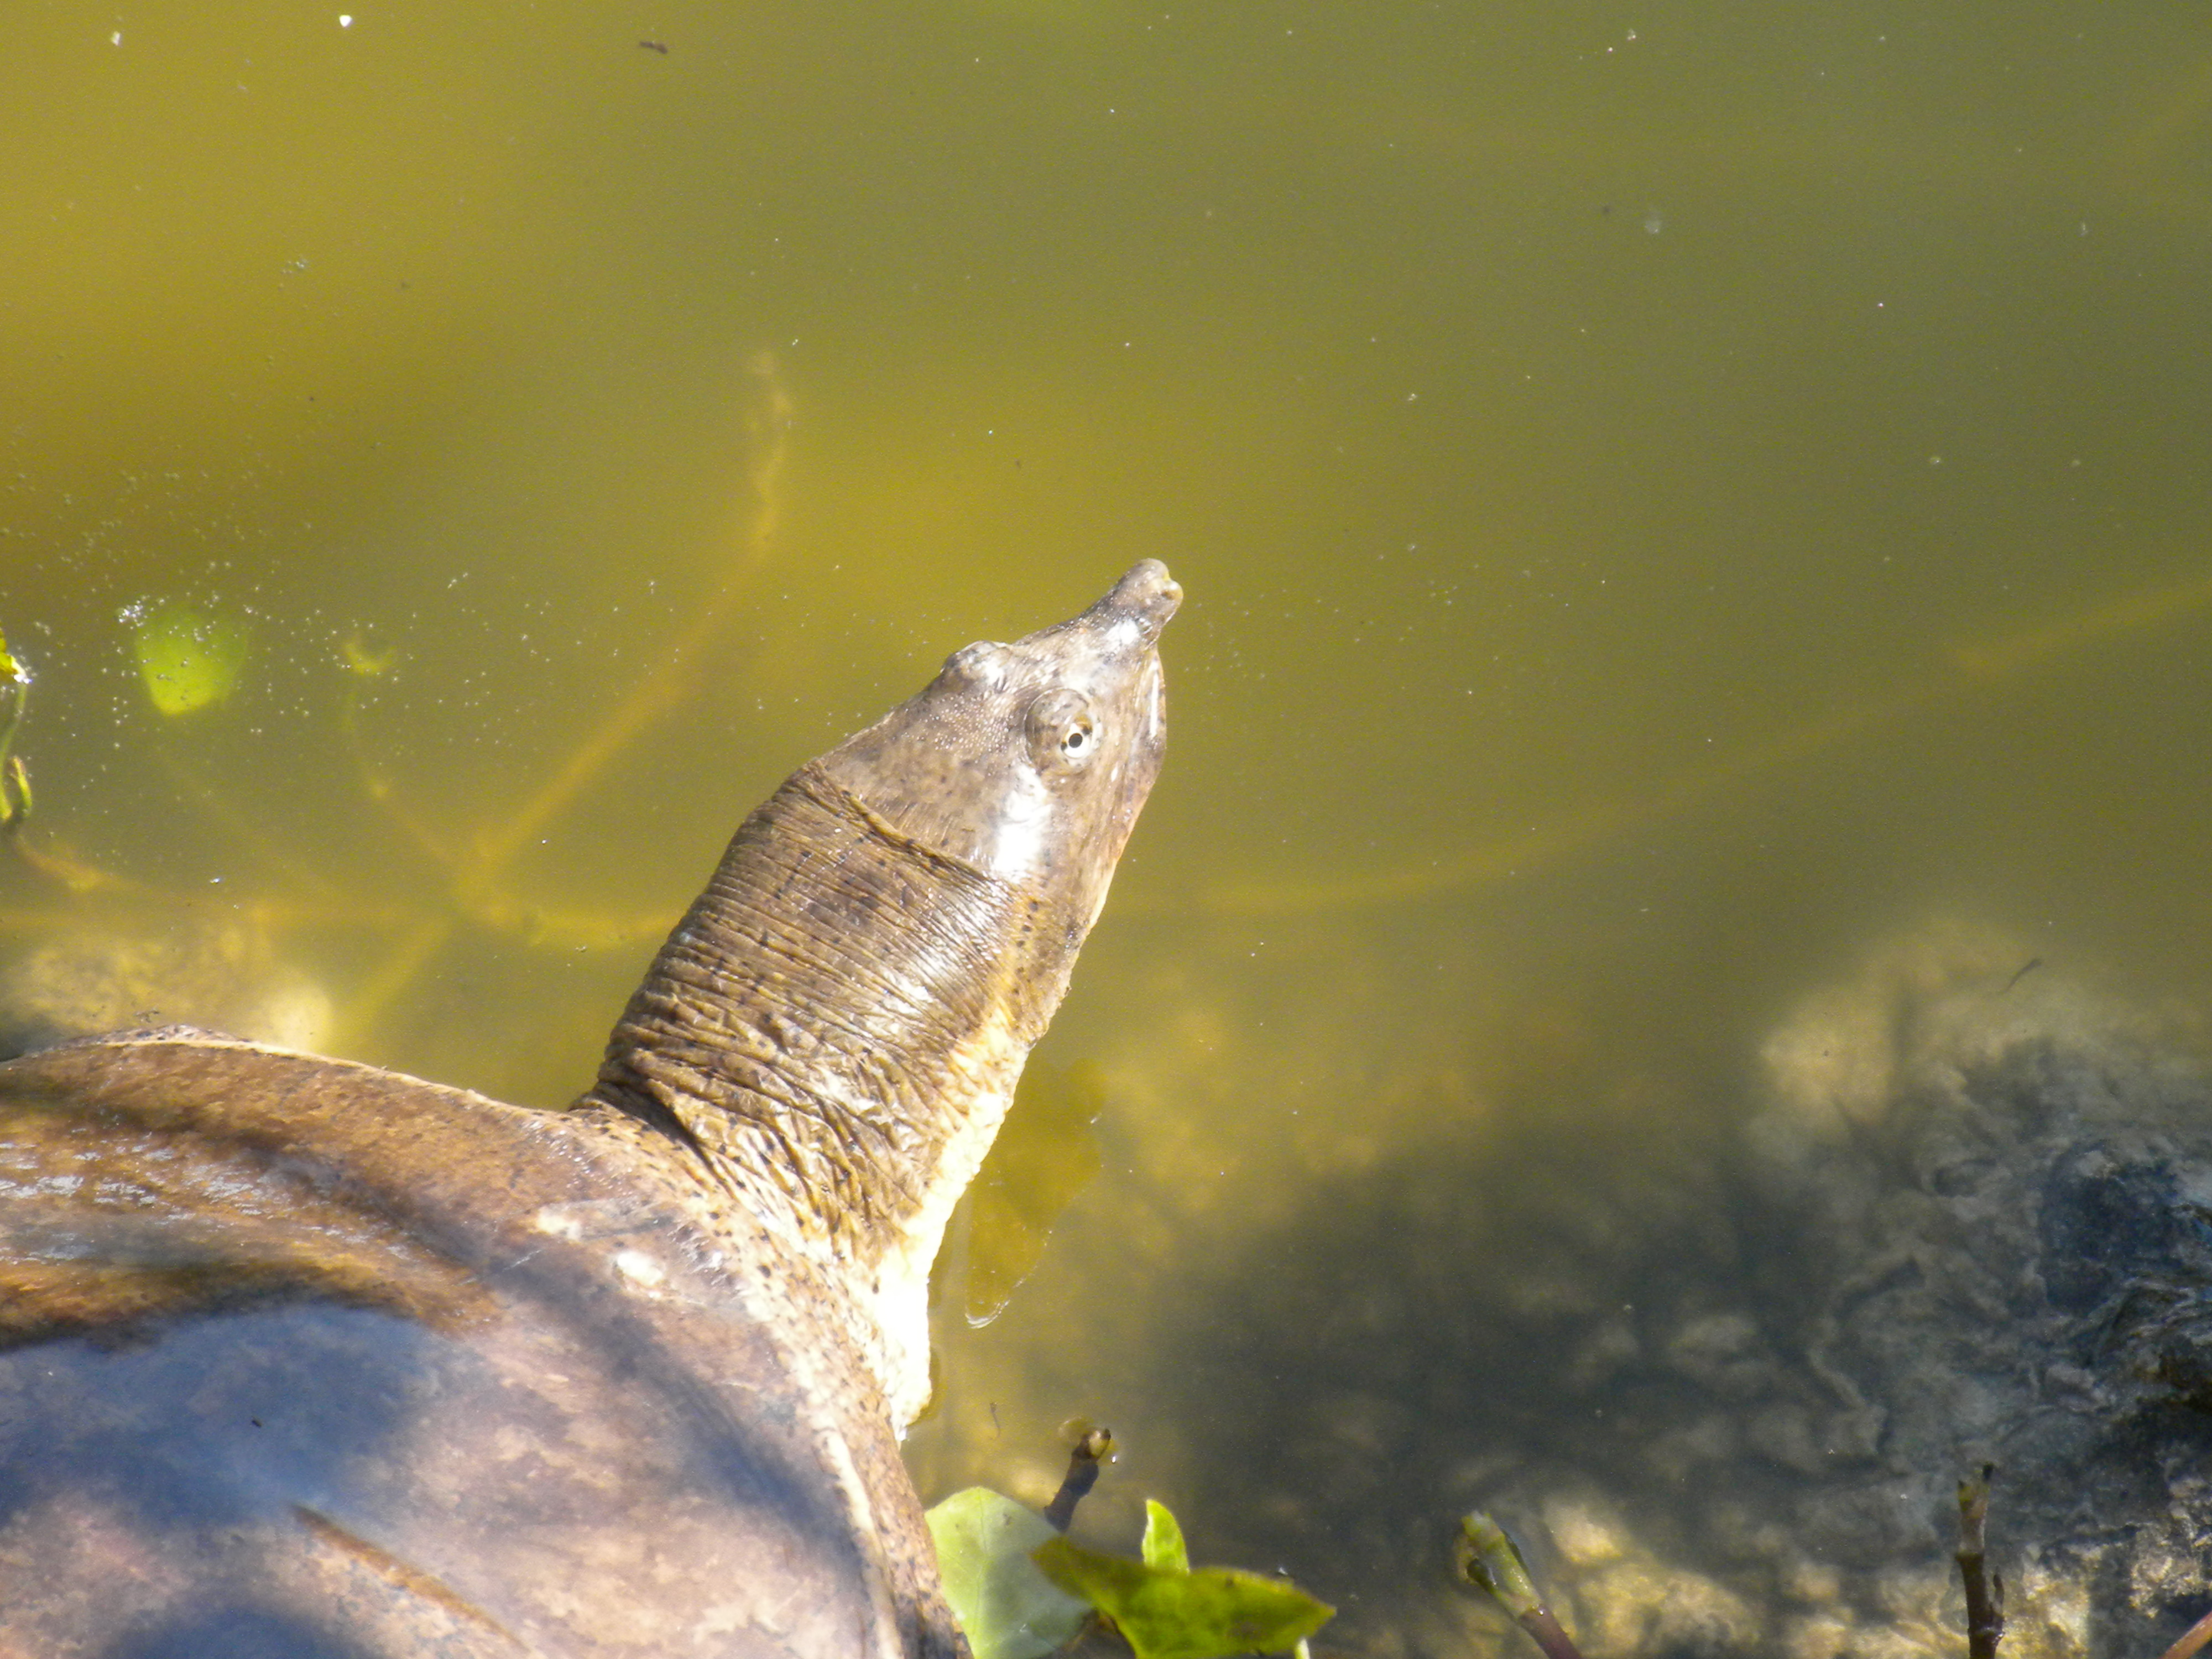 File:Turtle head.JPG - Wikimedia Commons